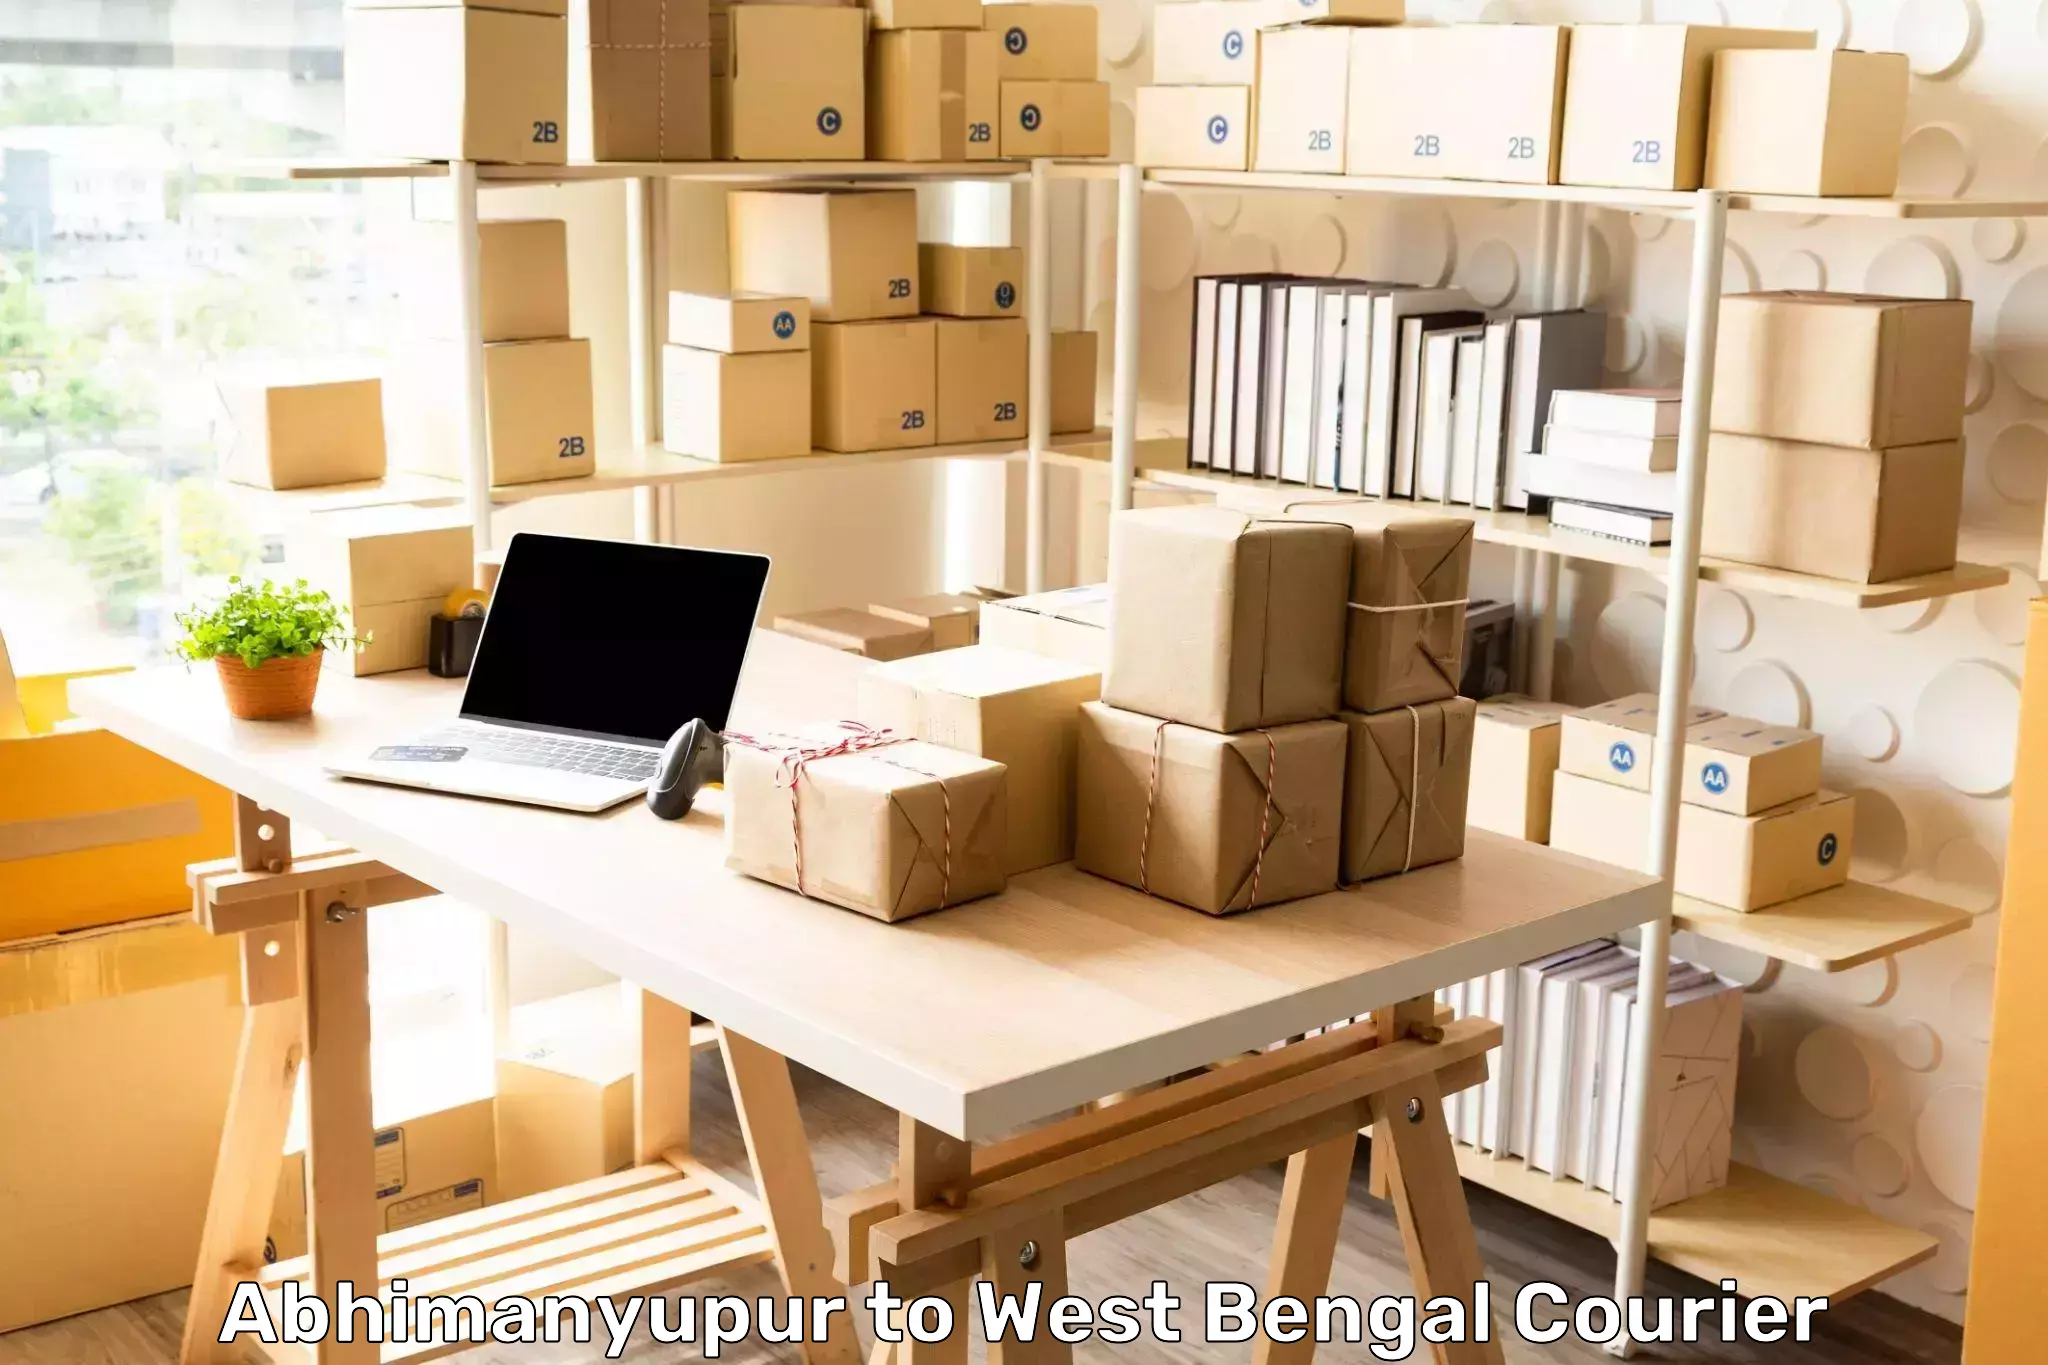 Cargo delivery service Abhimanyupur to Badkulla